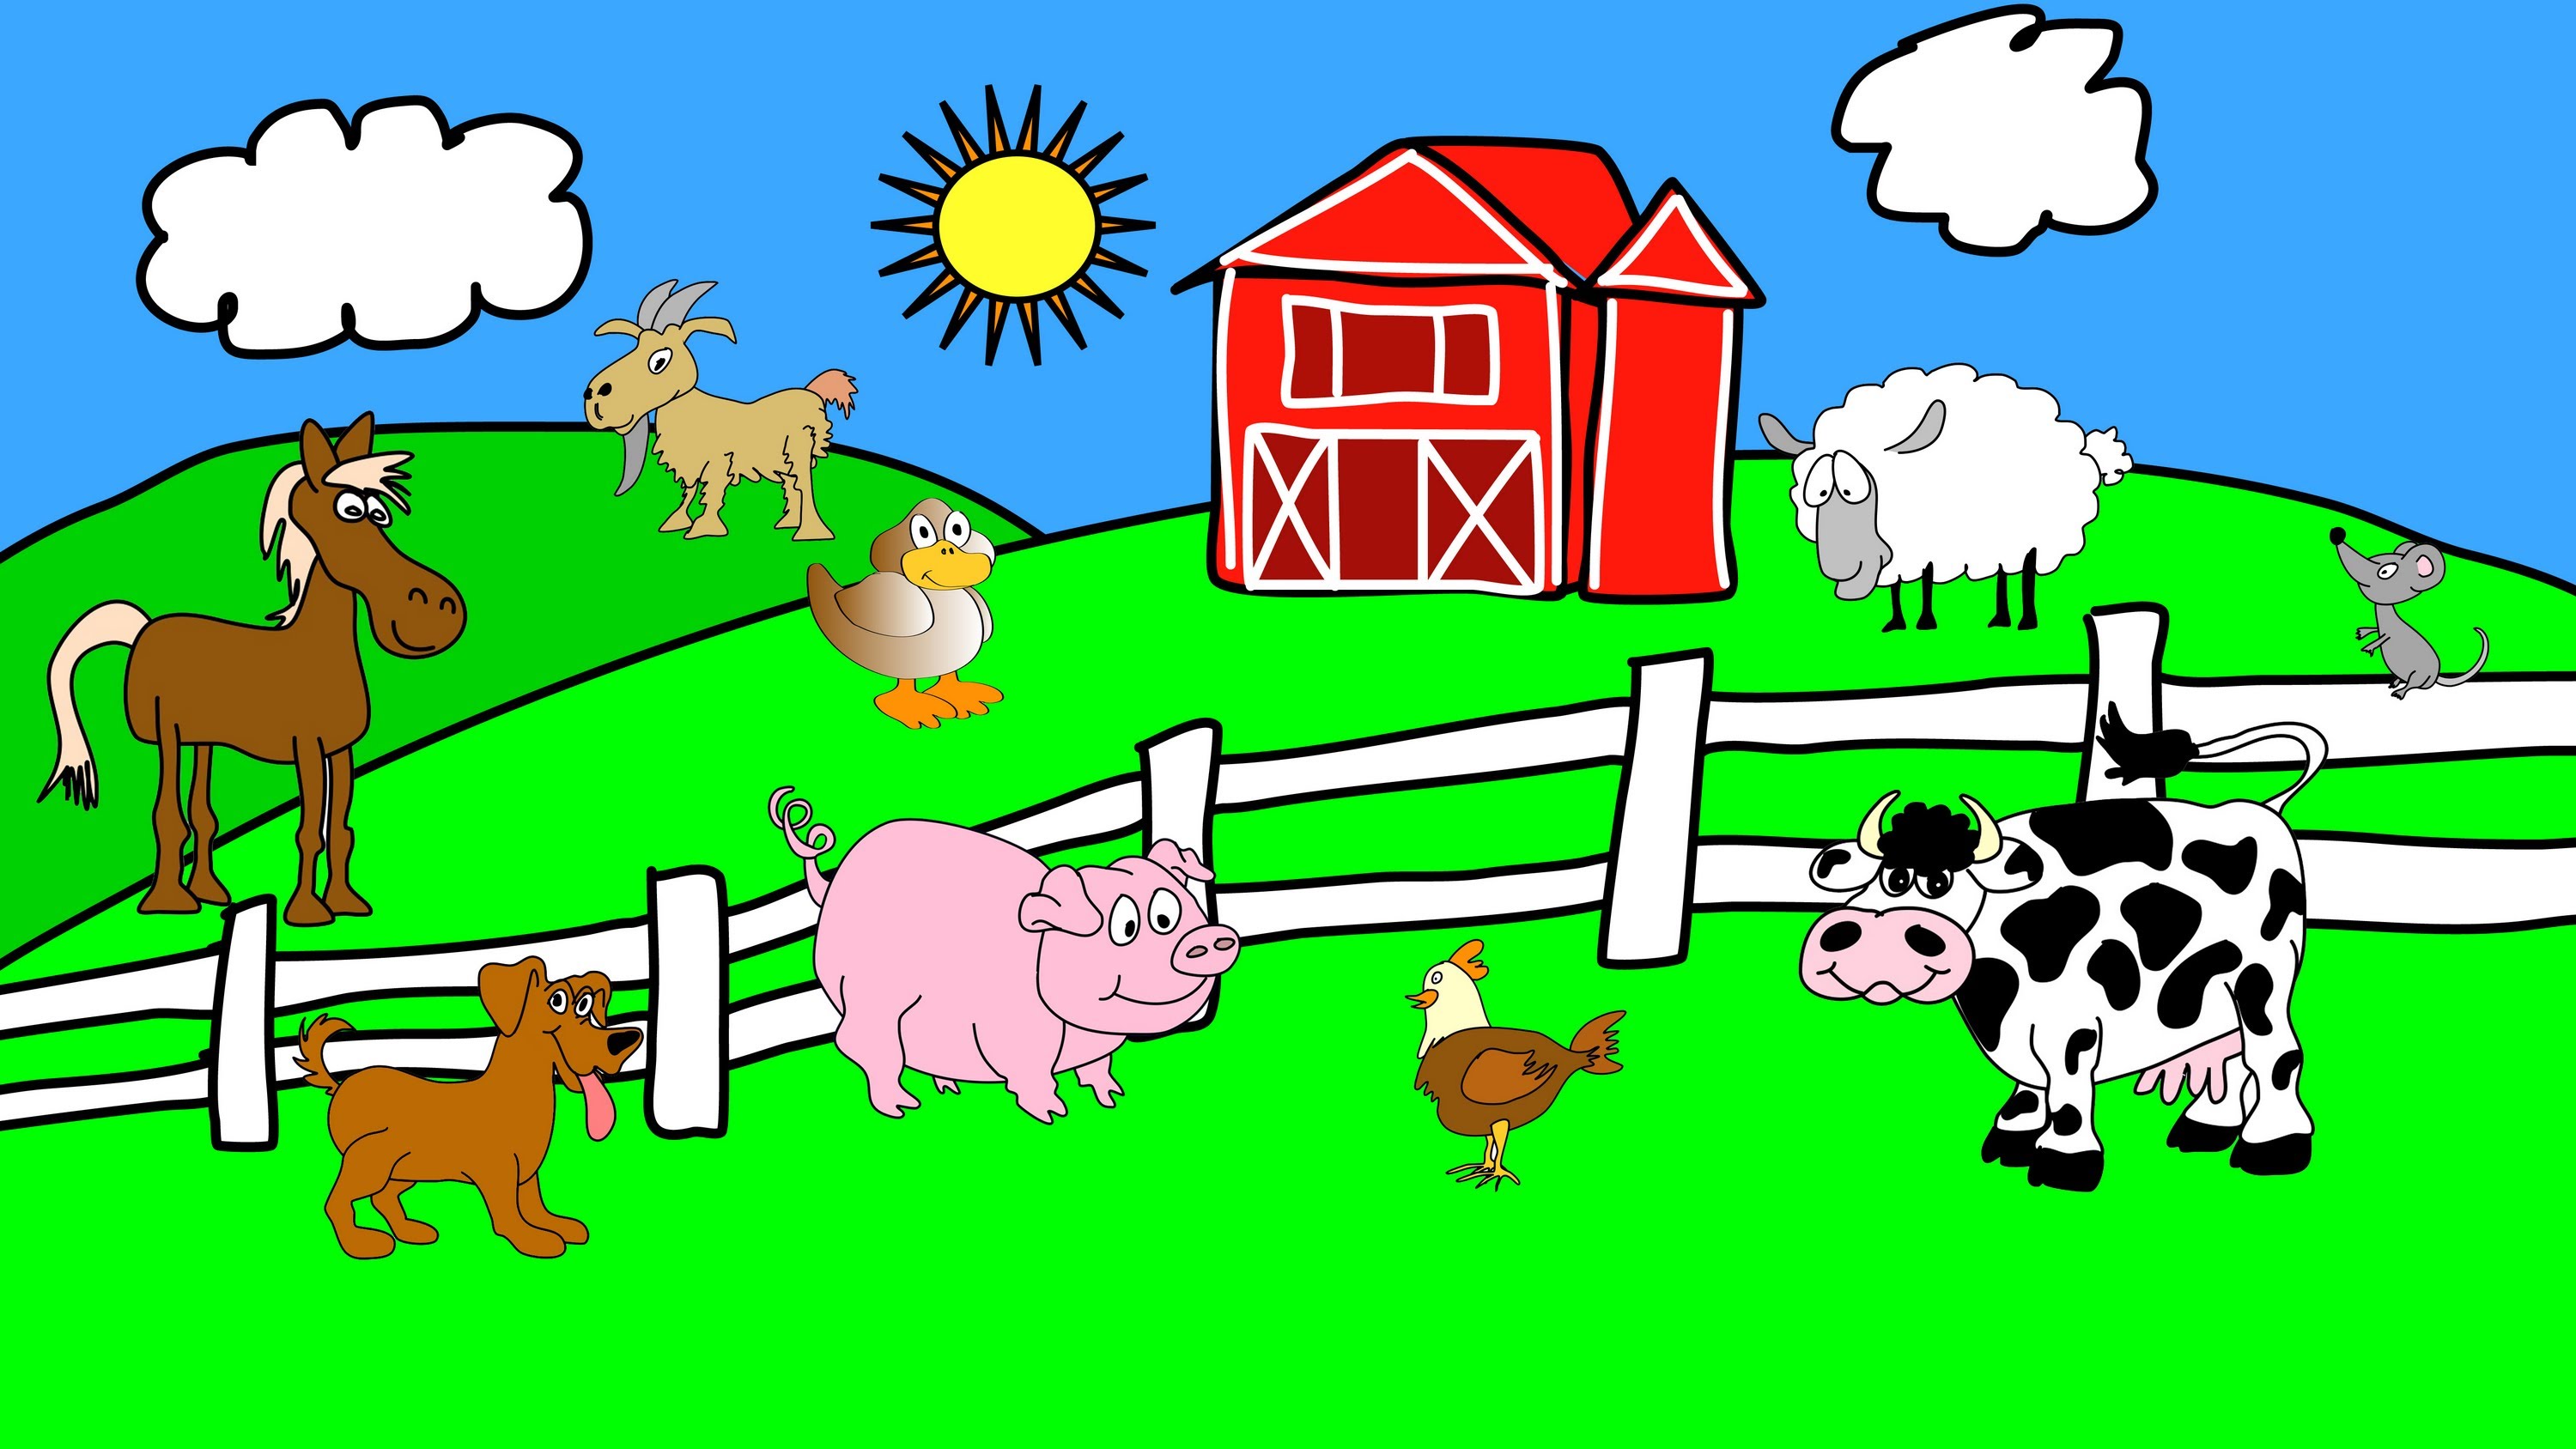 farm animals in a farm - Clip Art Library